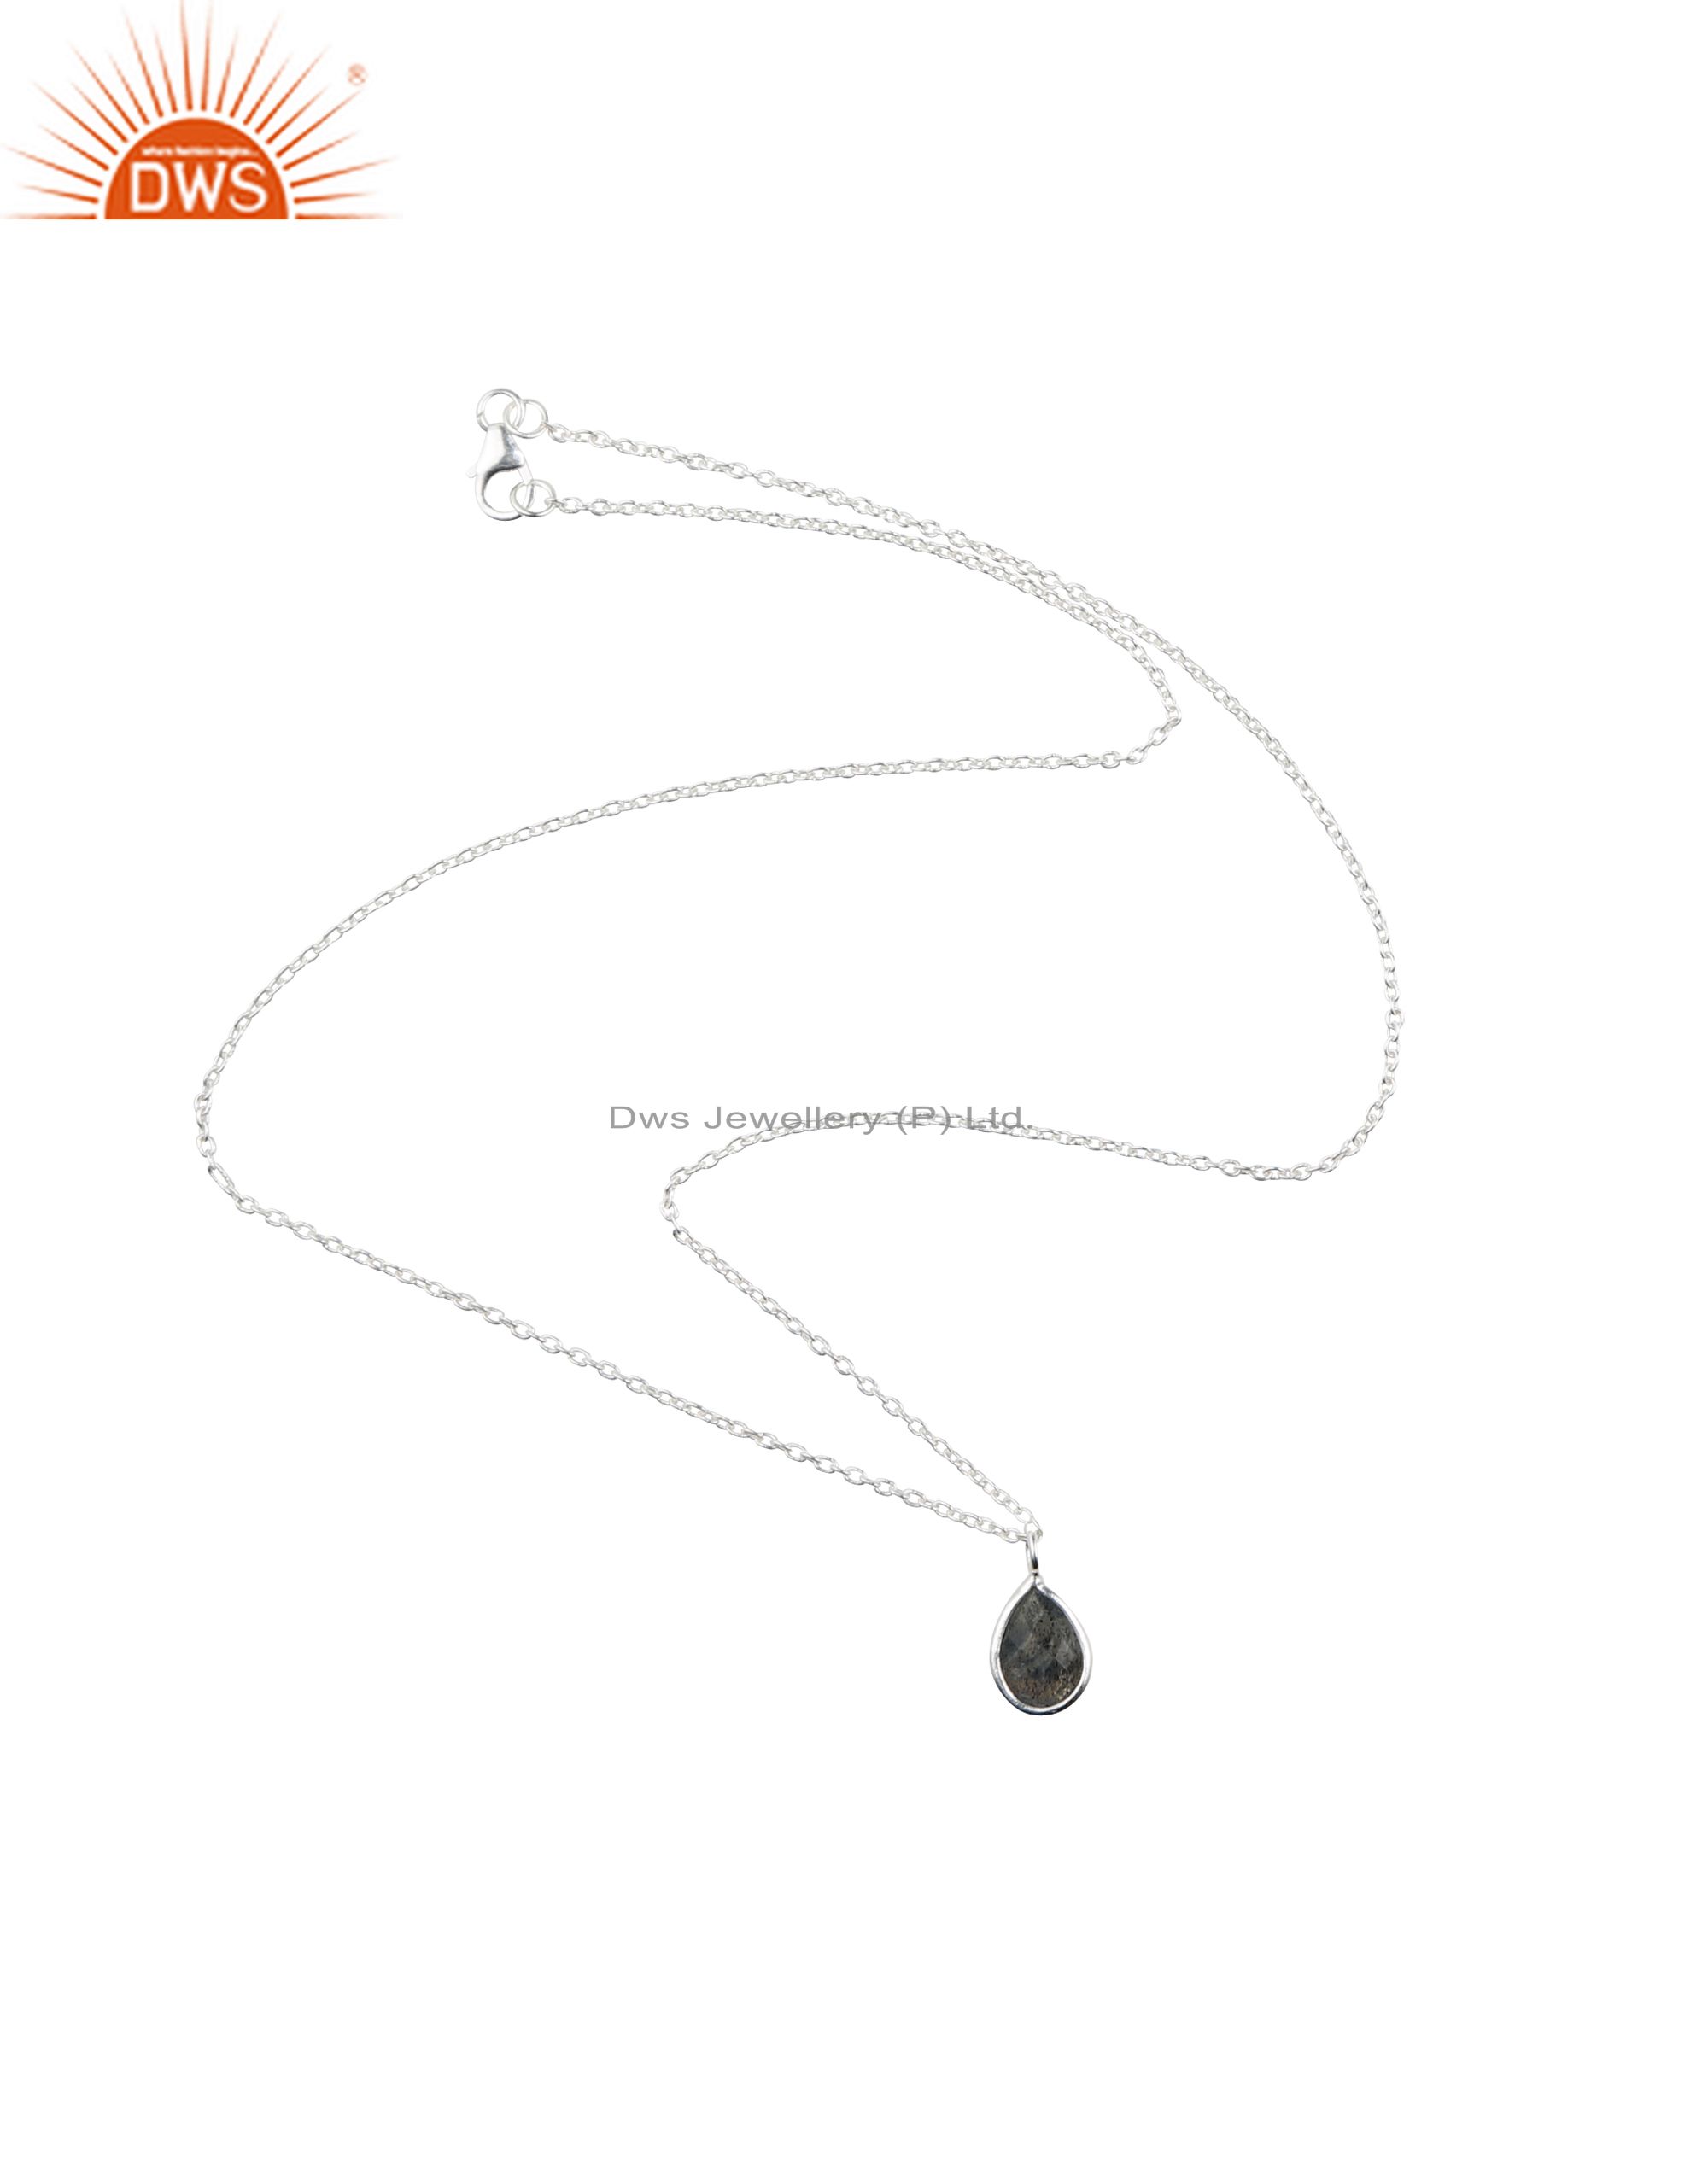 Handmade sterling silver natural labradorite bezel set drop pendant with chain